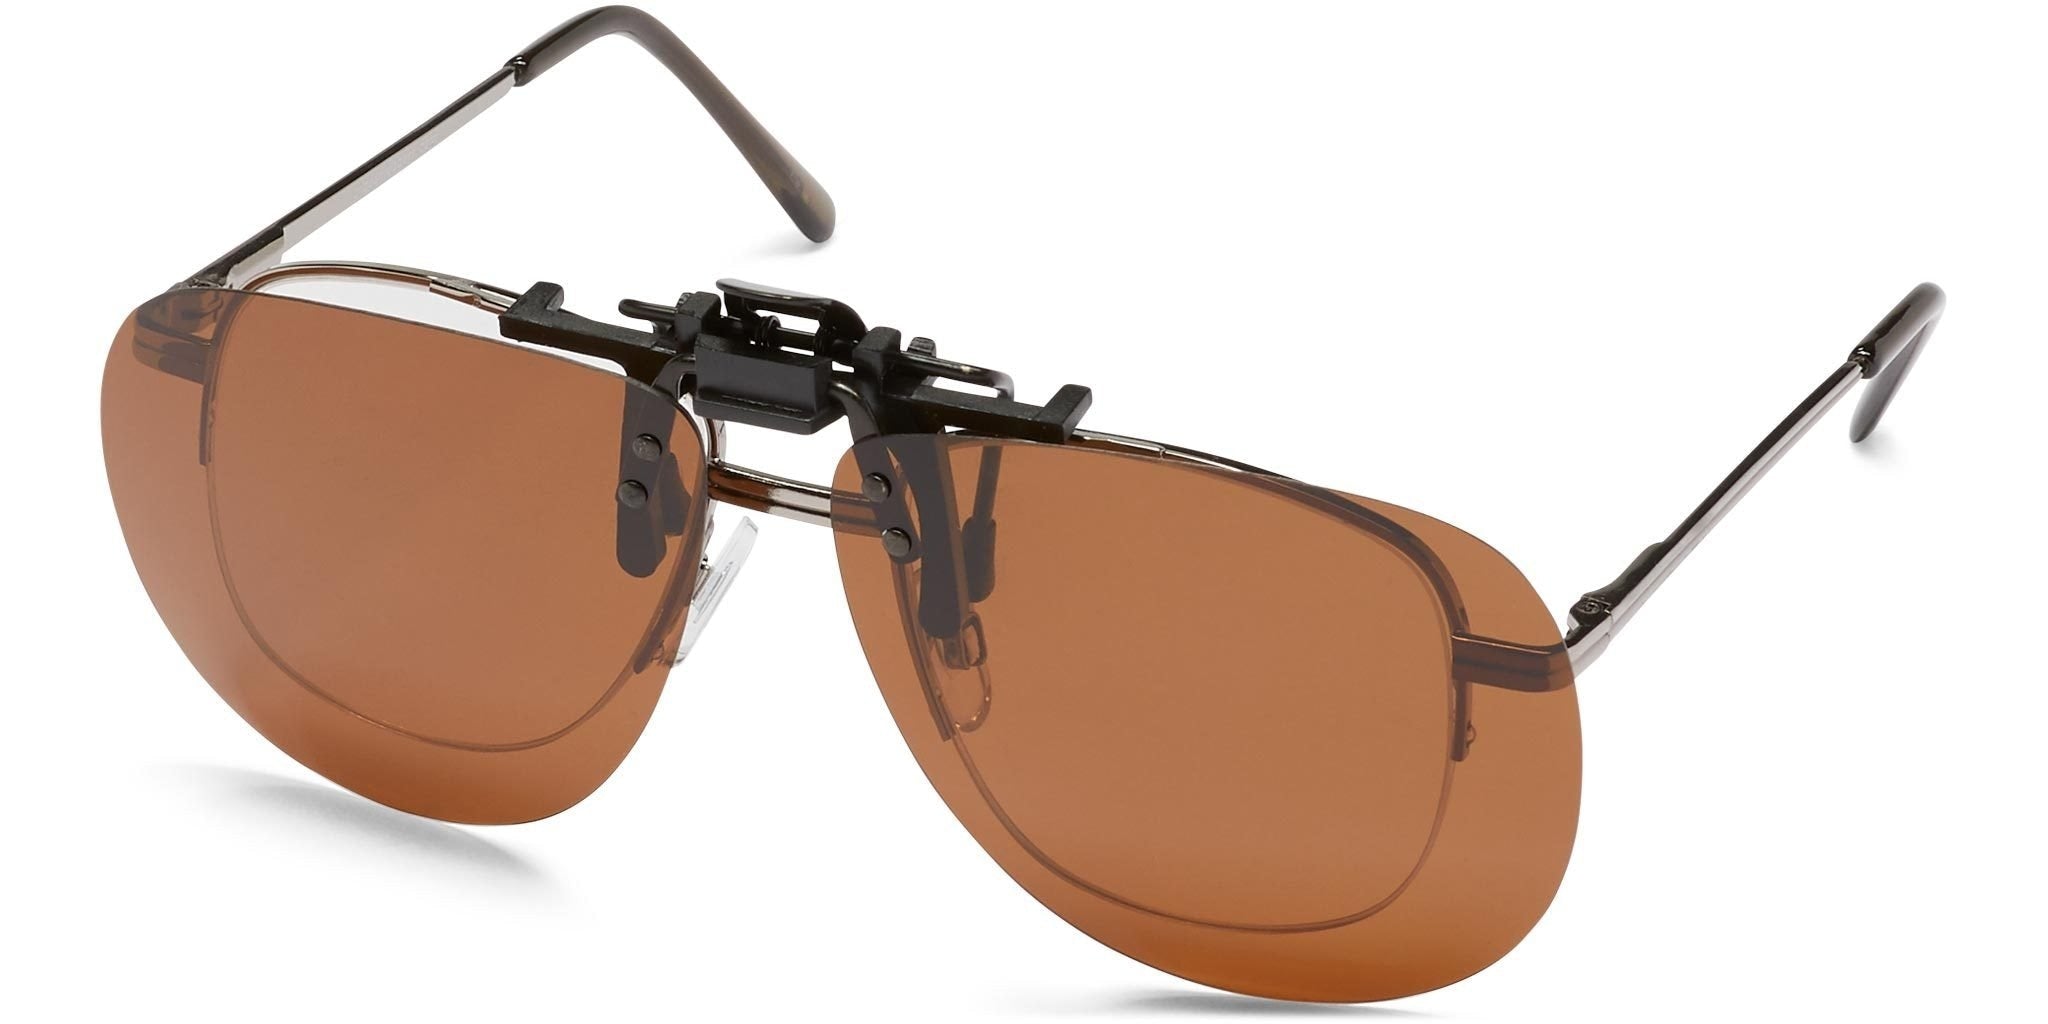 Clip-&-Flip Aviator Polarized Sunglasses by Fisherman Eyewear